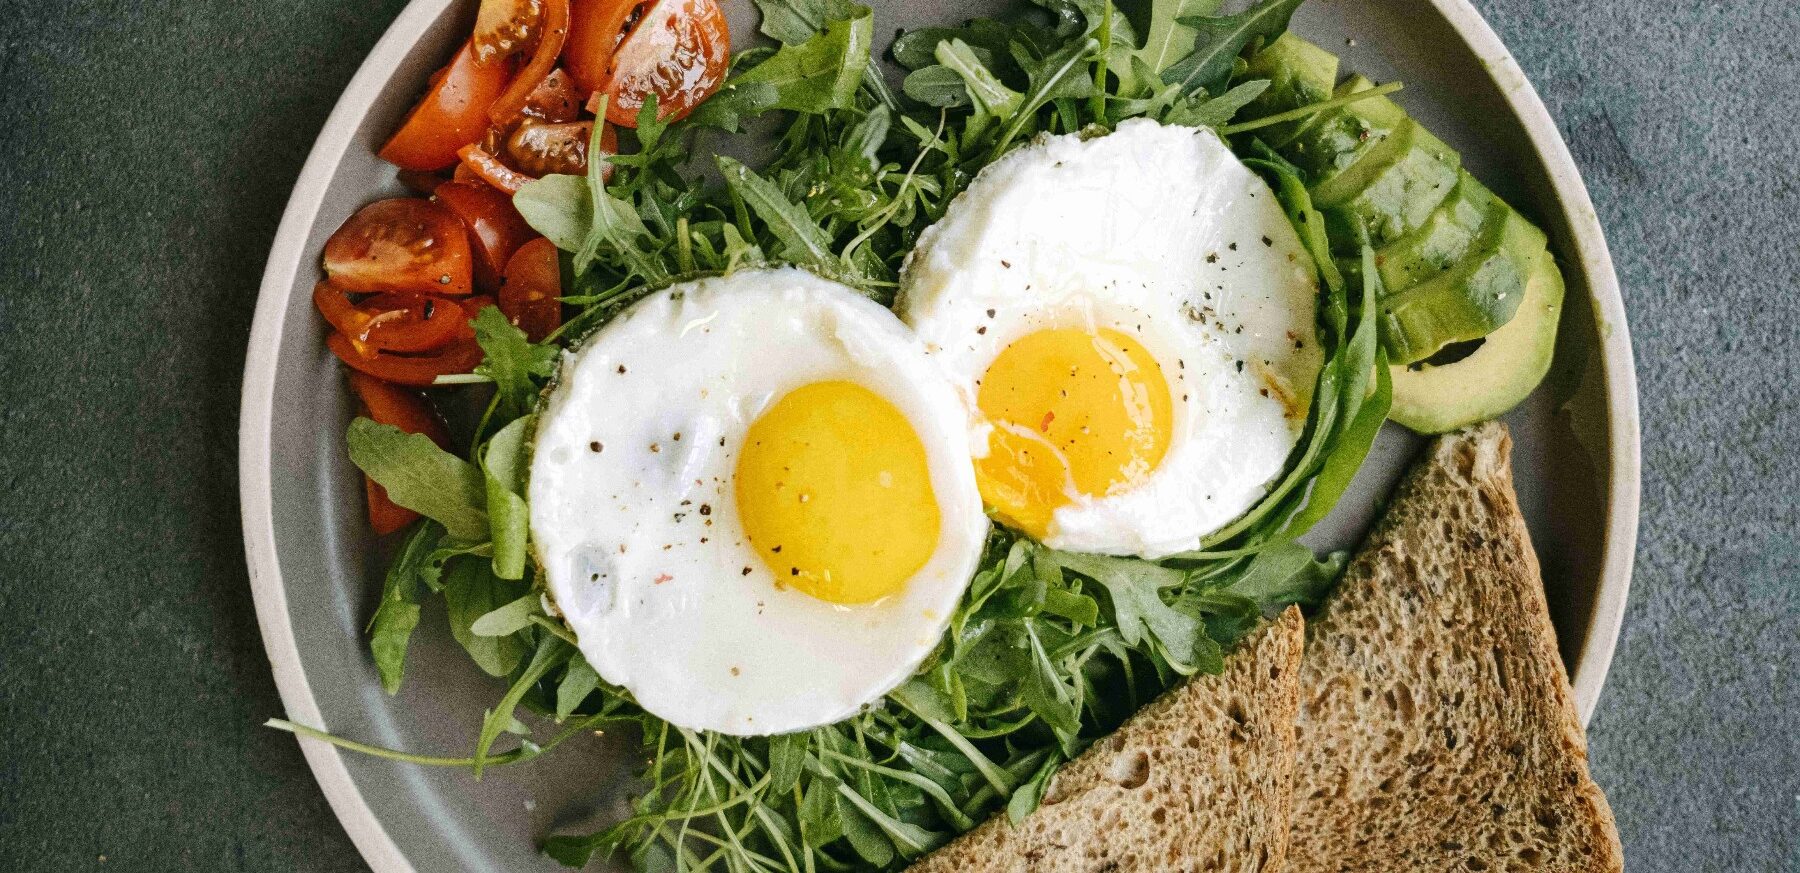 Egg Yolks - Foods High in Vitamin D